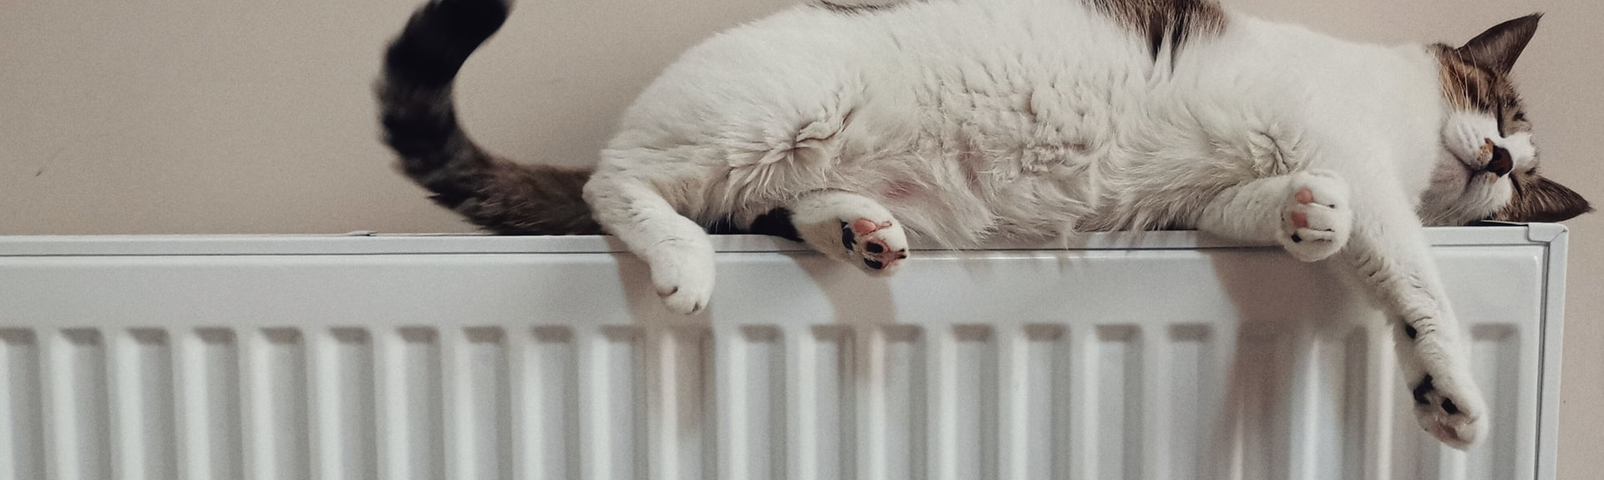 cat on radiator